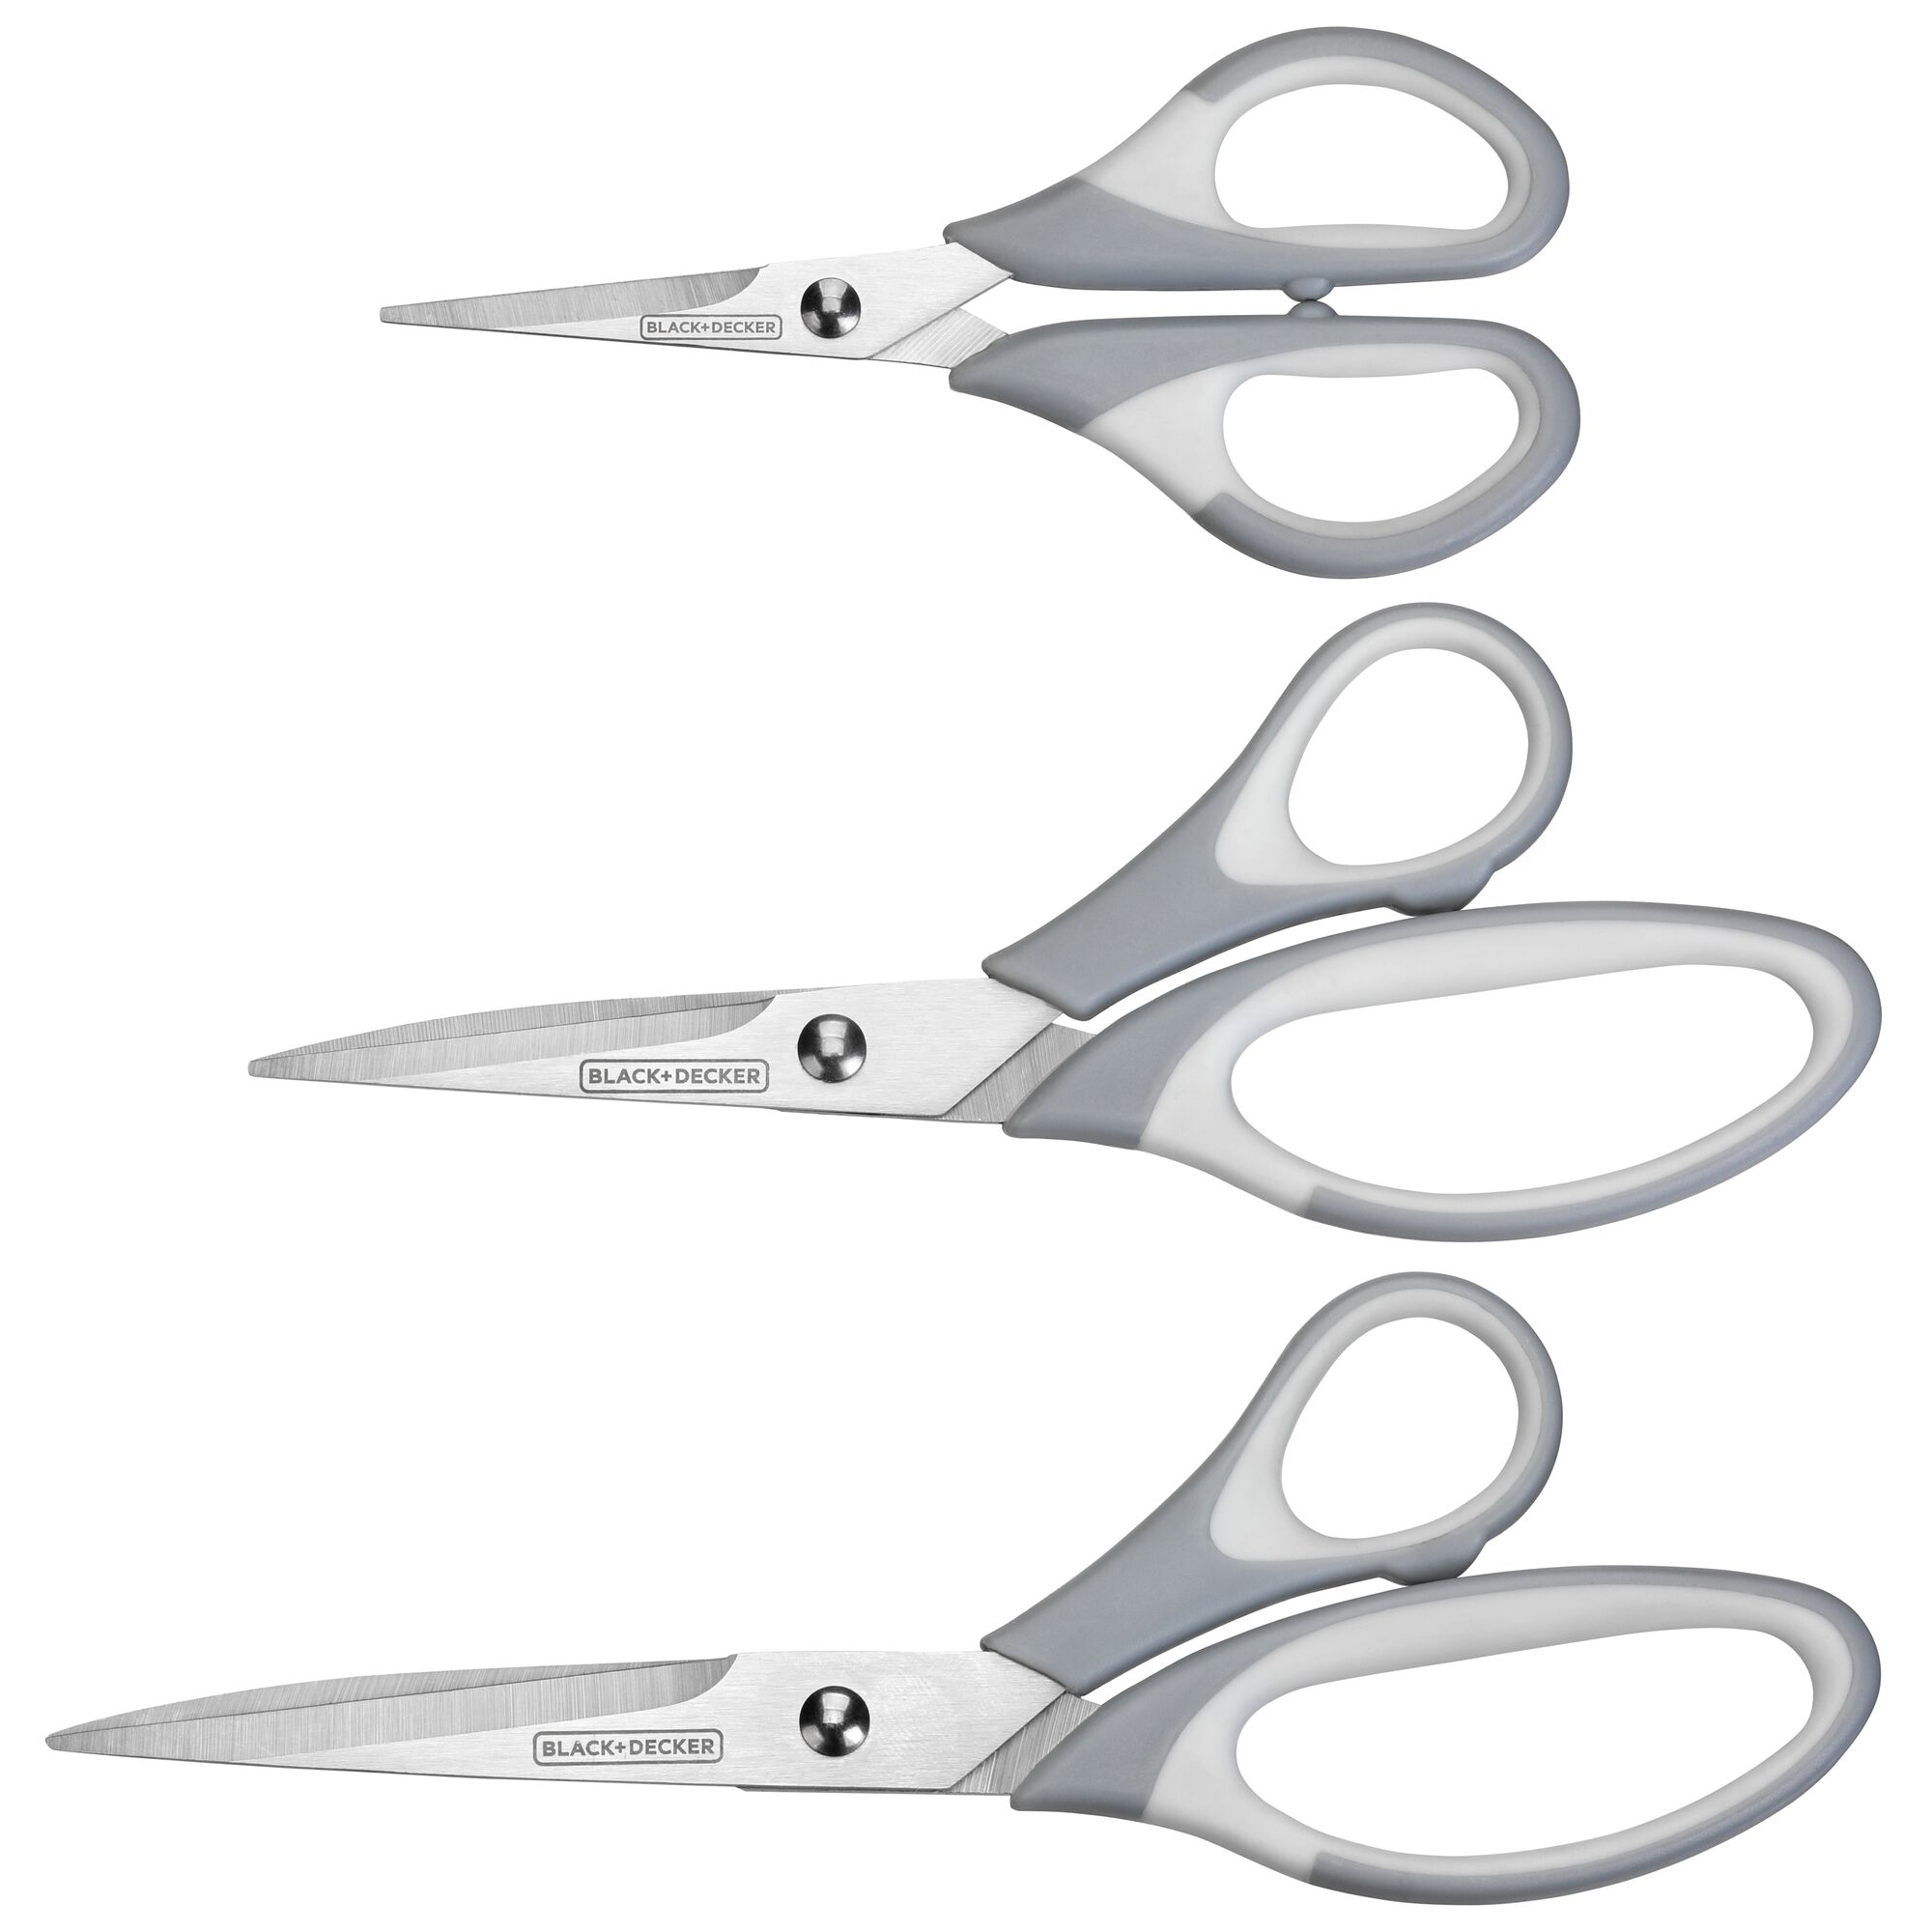 Profile of 3 pairs of Black and decker scissors